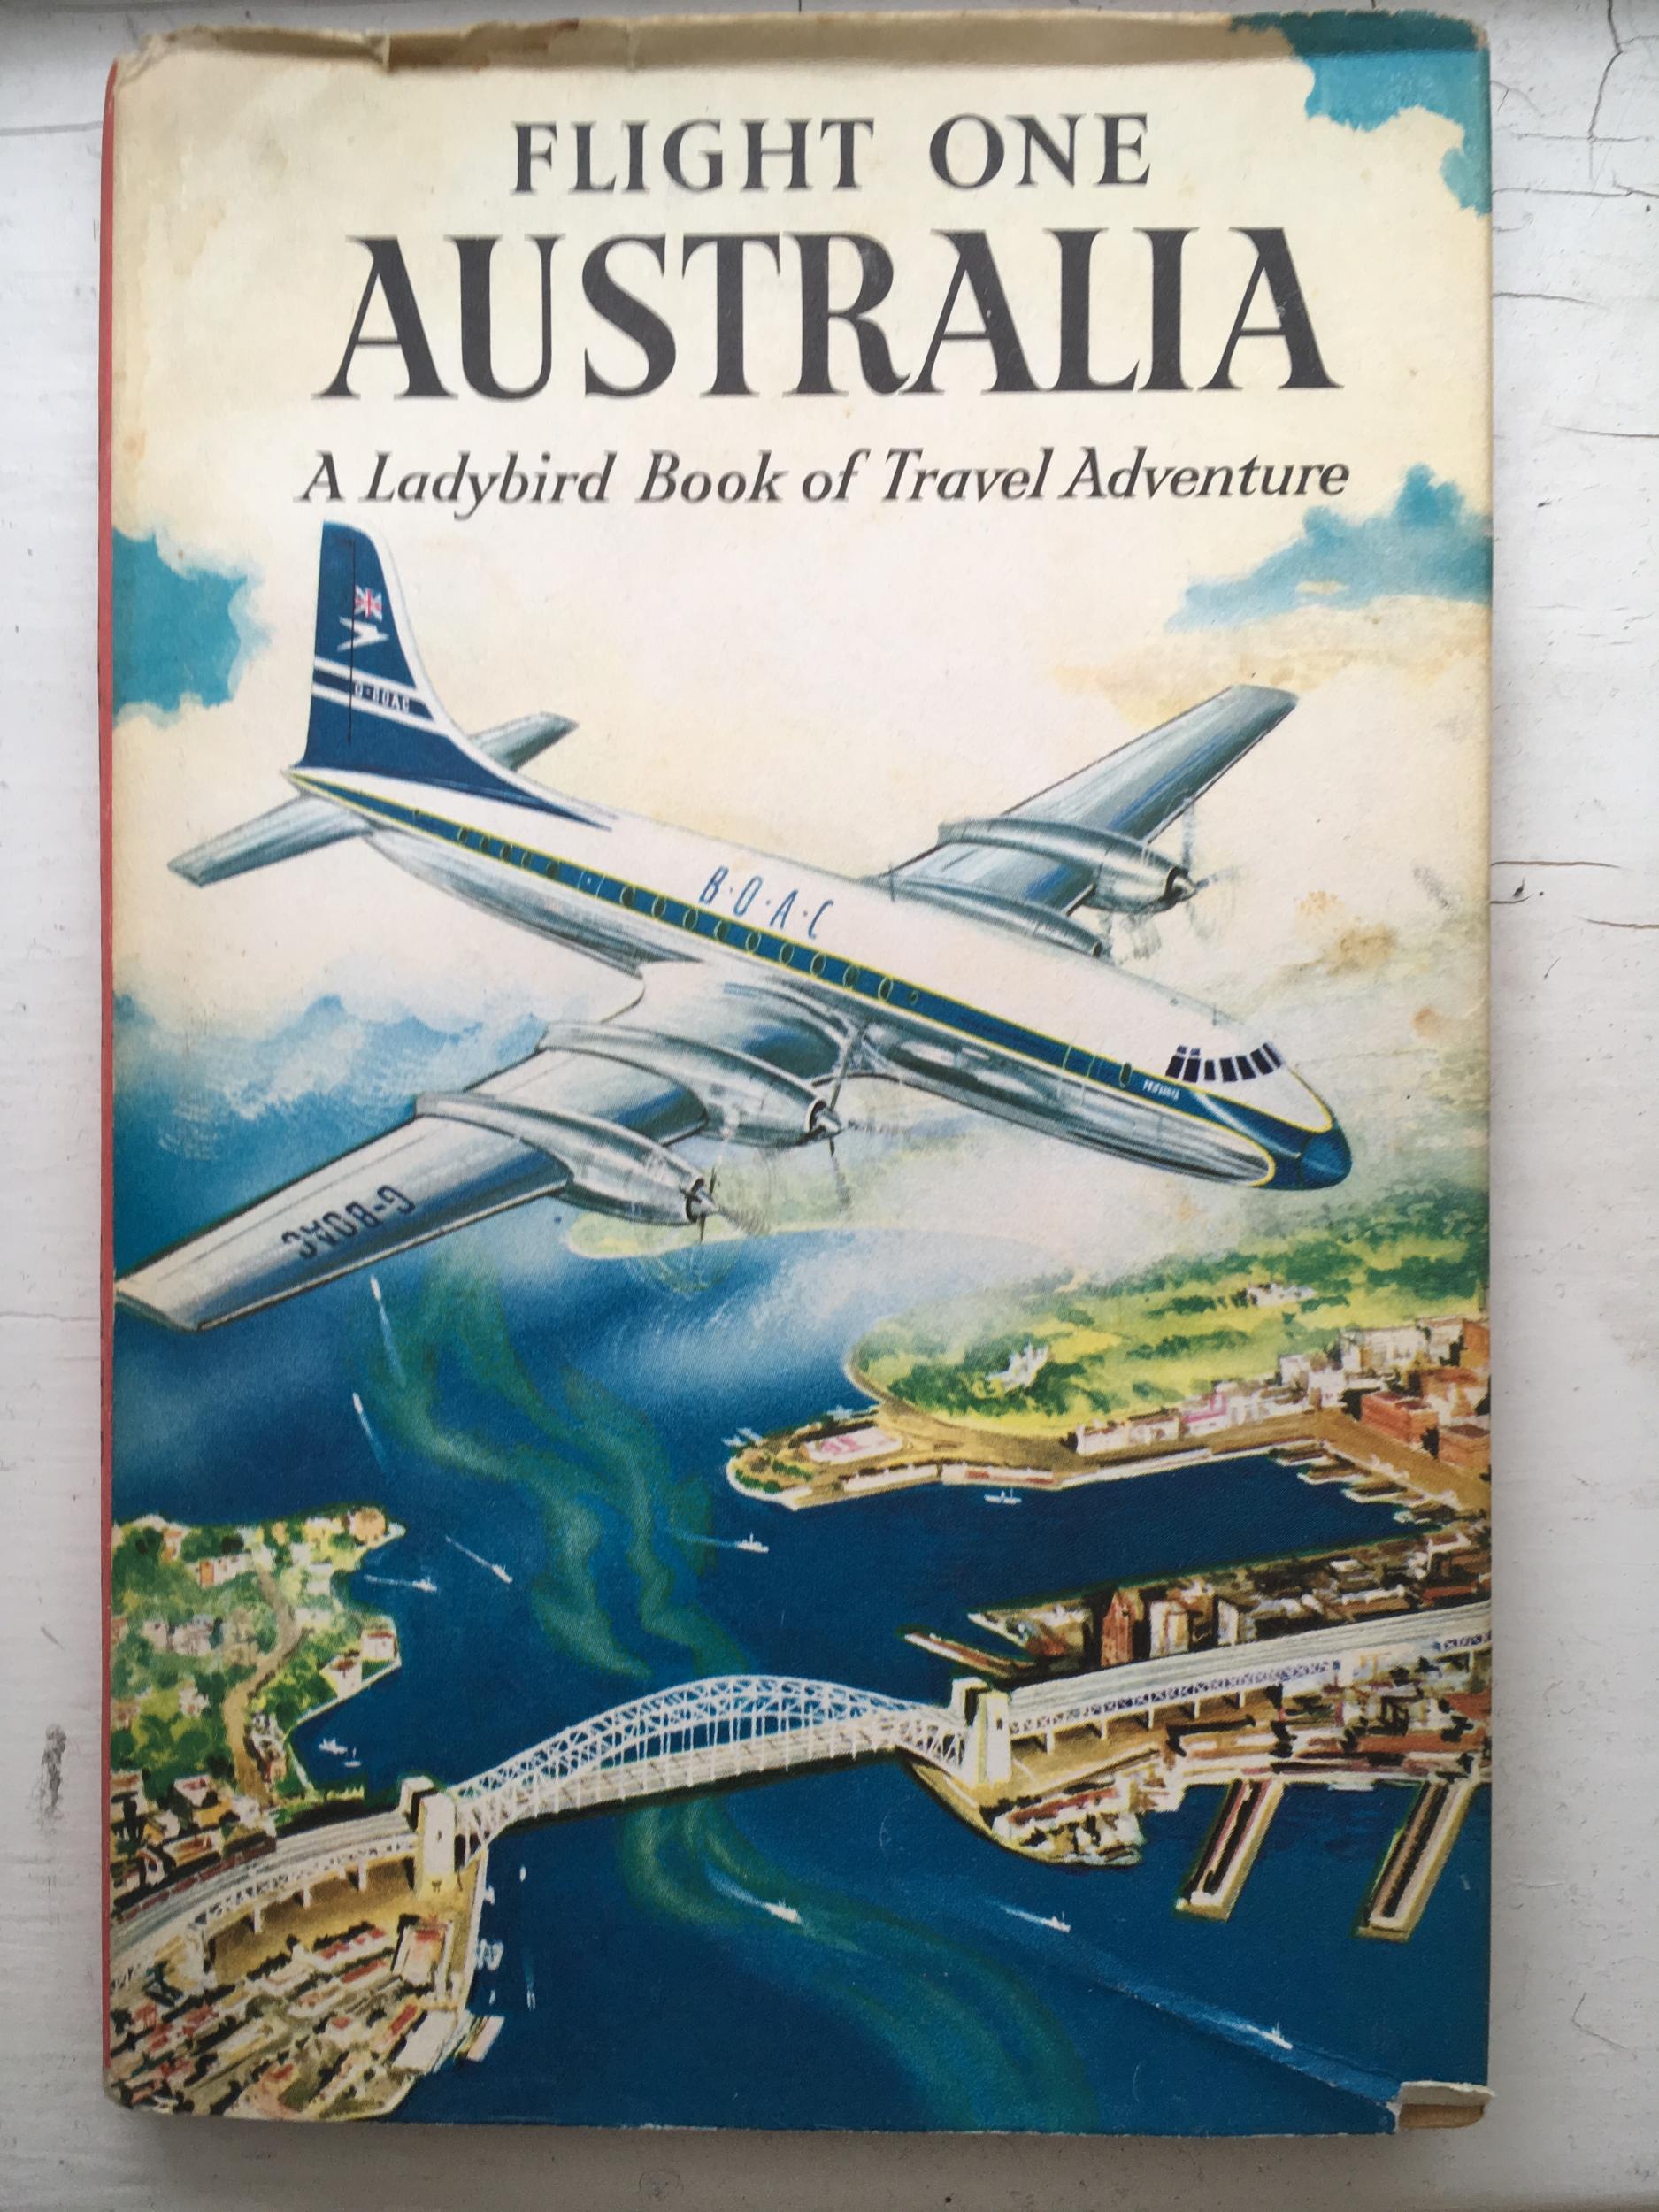 The 1958 book Flight One Australia: A Ladybird Book of Travel Adventure